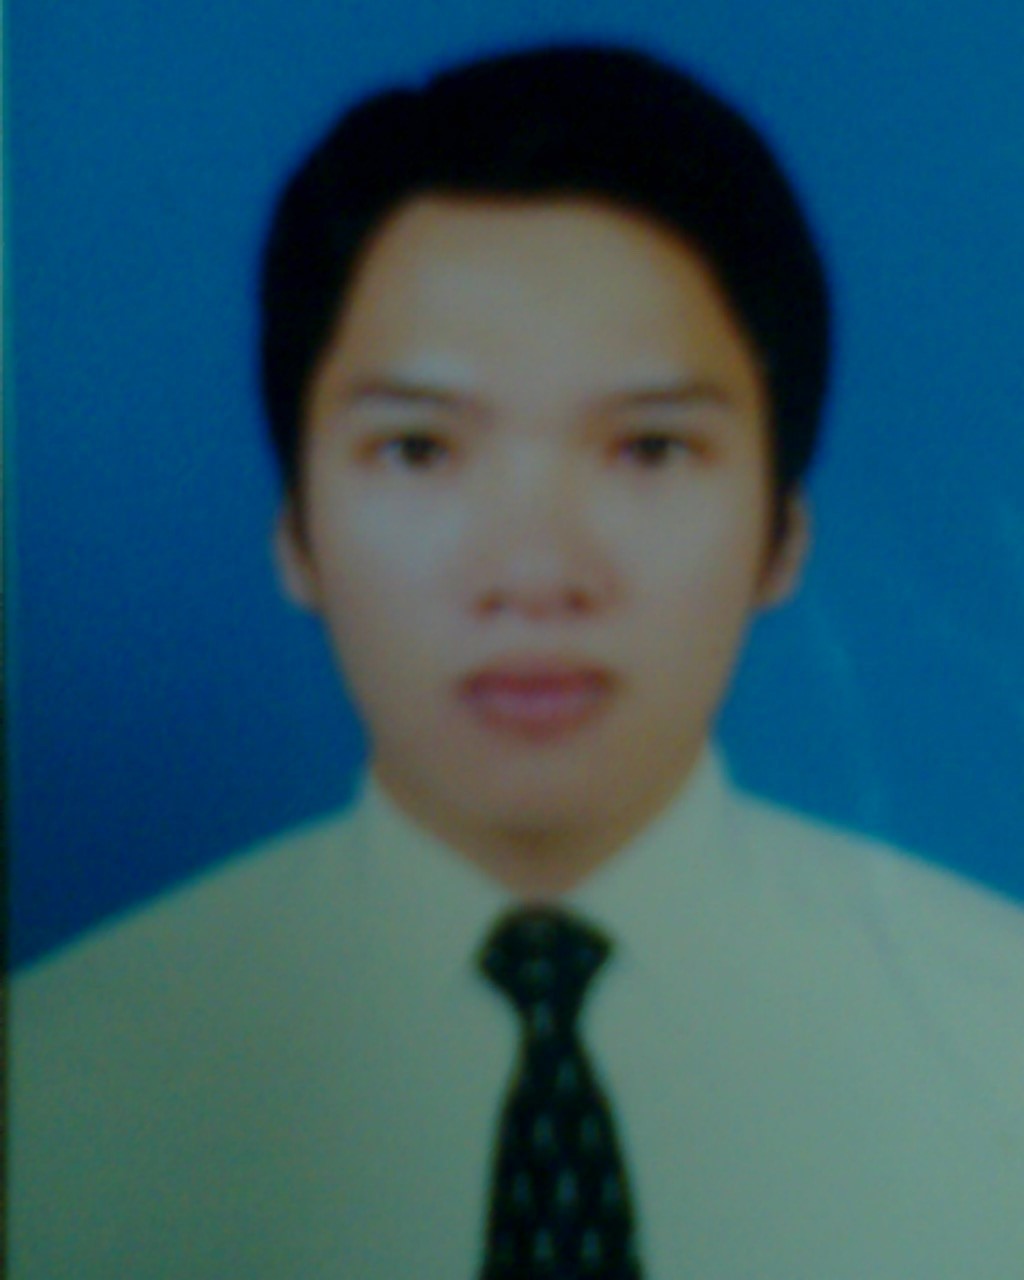 CV Nguyen Tien Dung